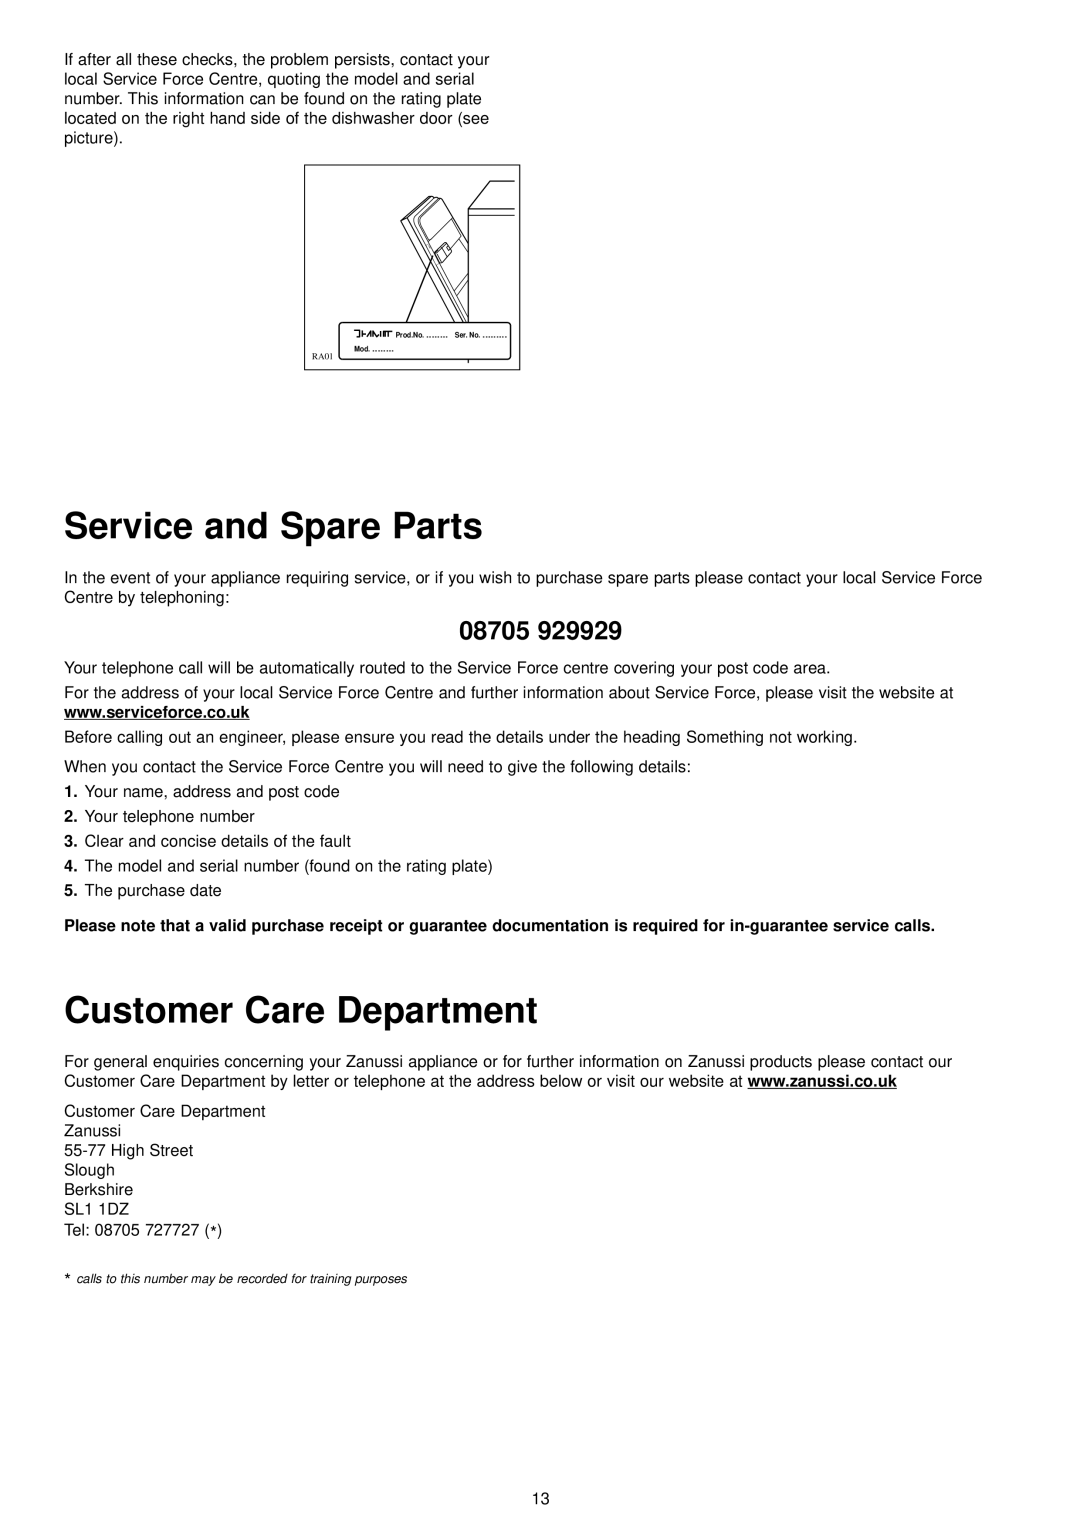 Zanussi ZDT 5052 manual Service and Spare Parts, Customer Care Department, zanussi.co.uk, 08705 